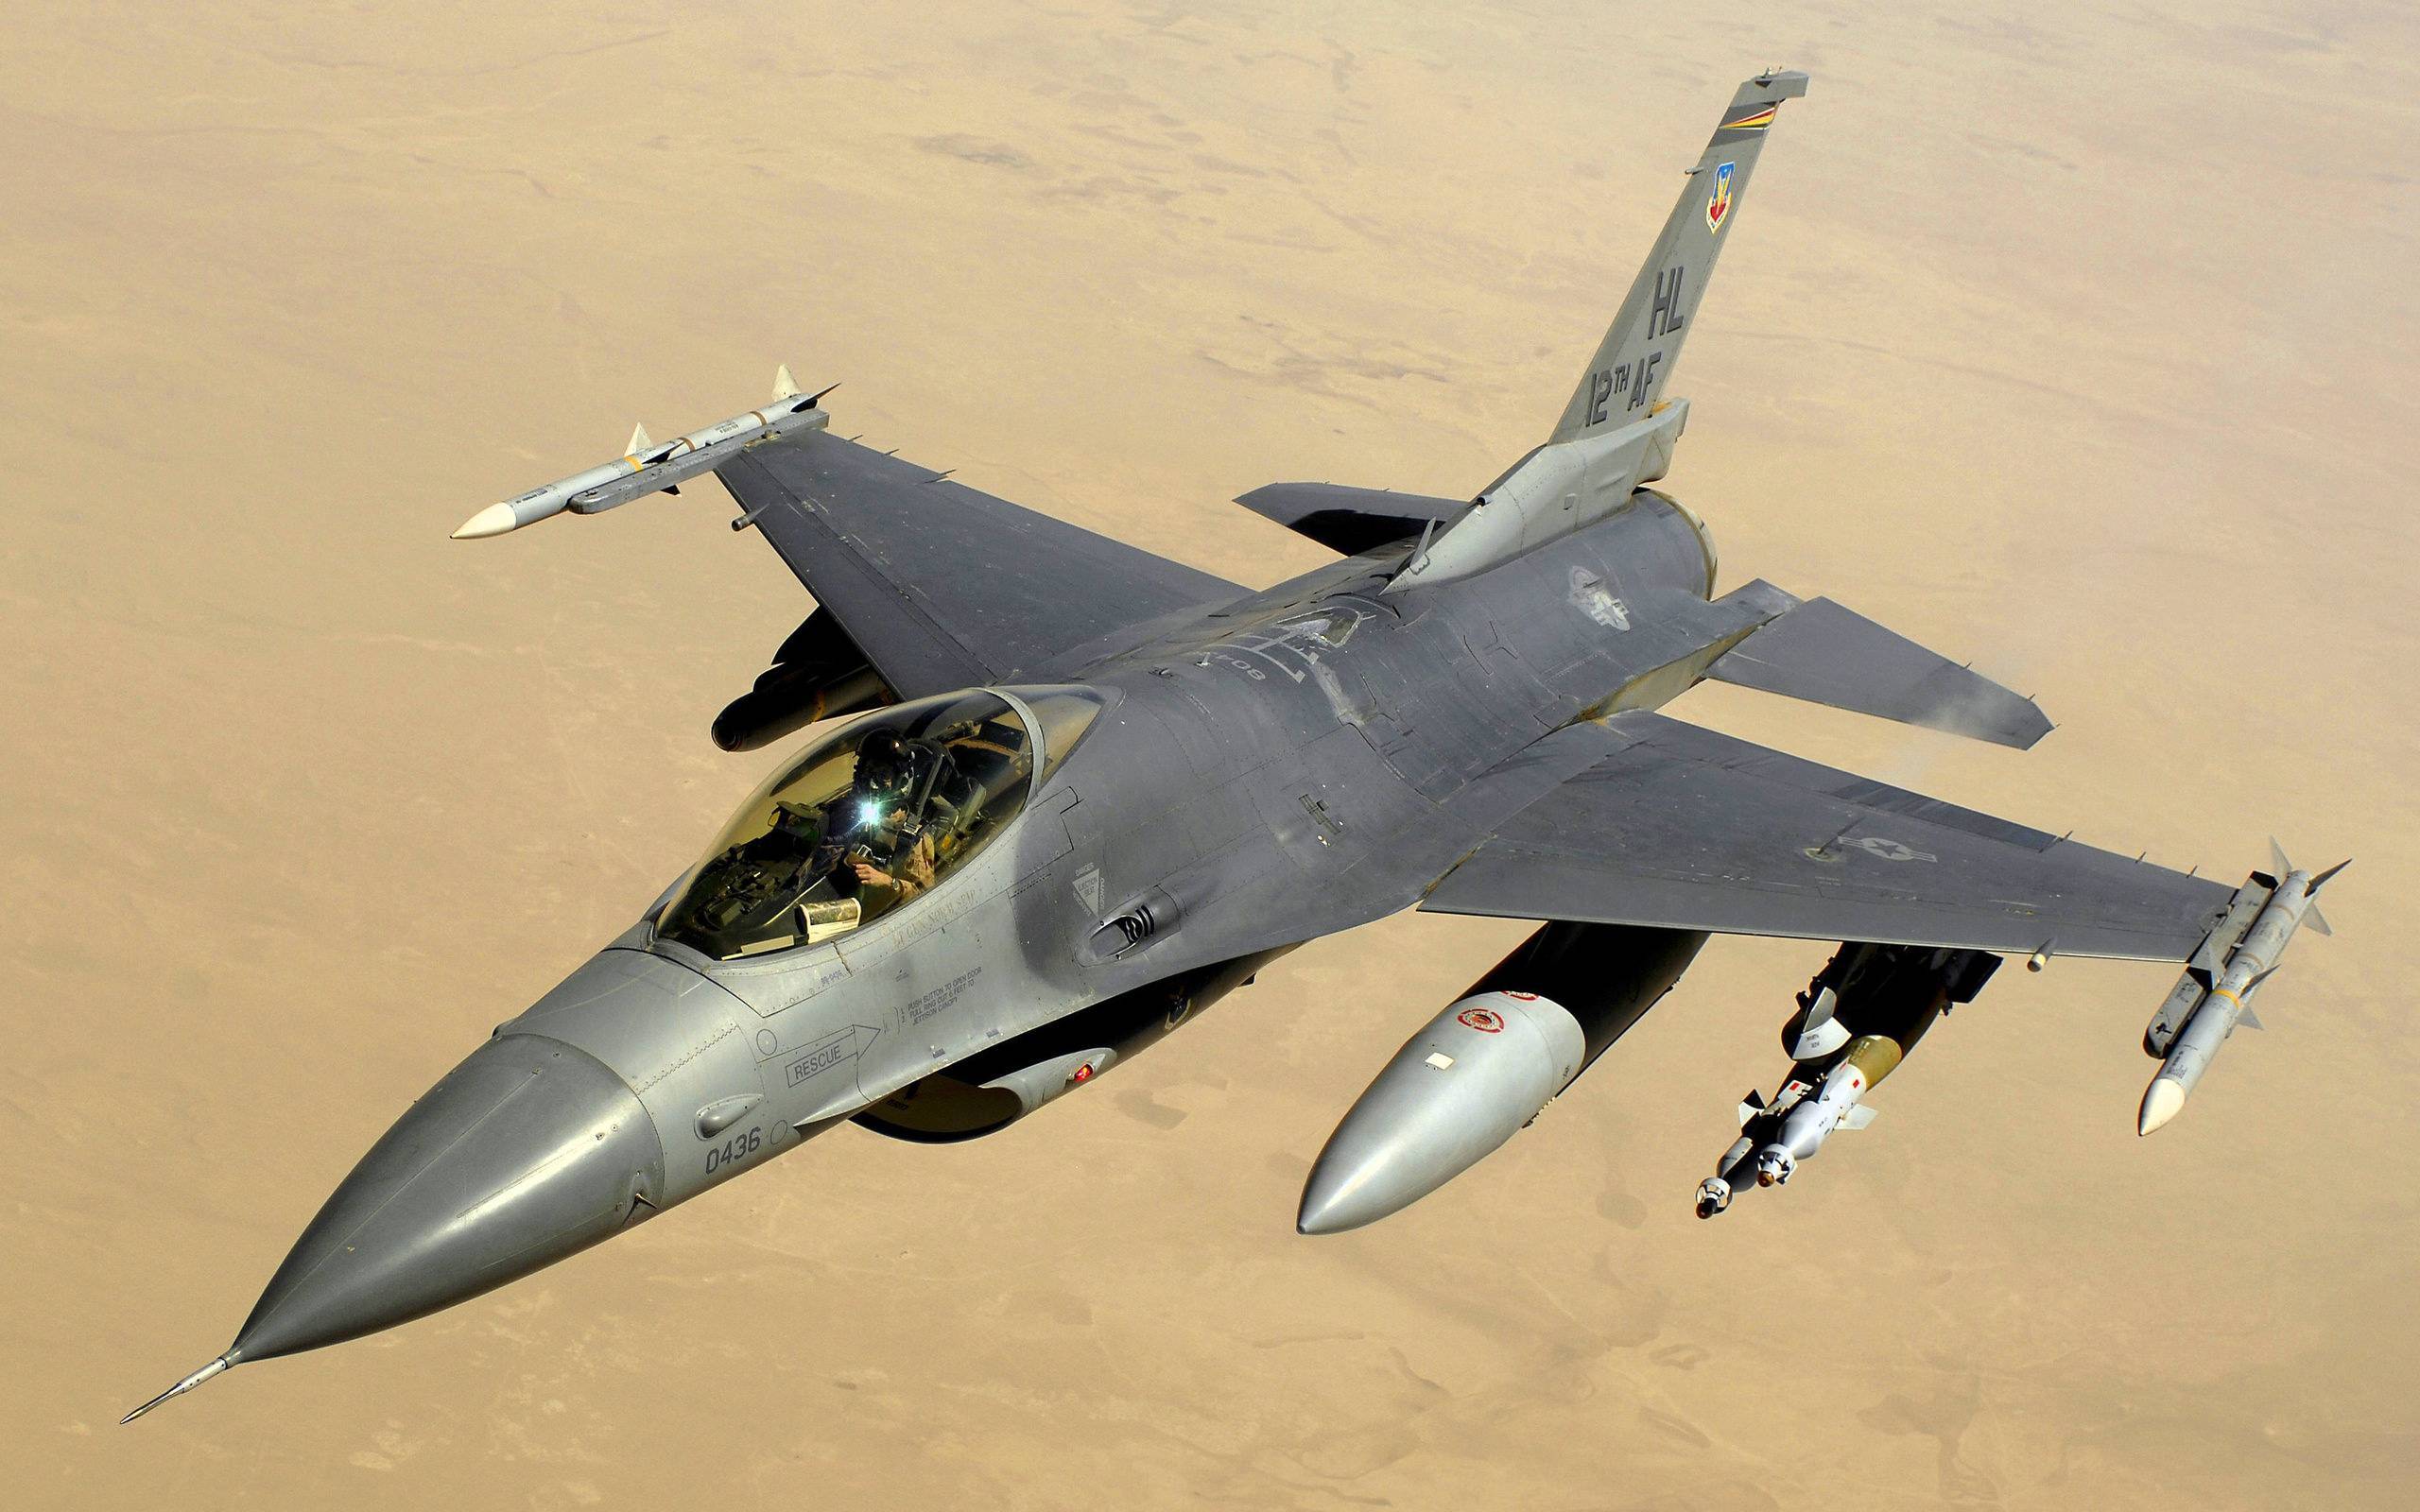 General dynamics f-16 fighting falcon ²